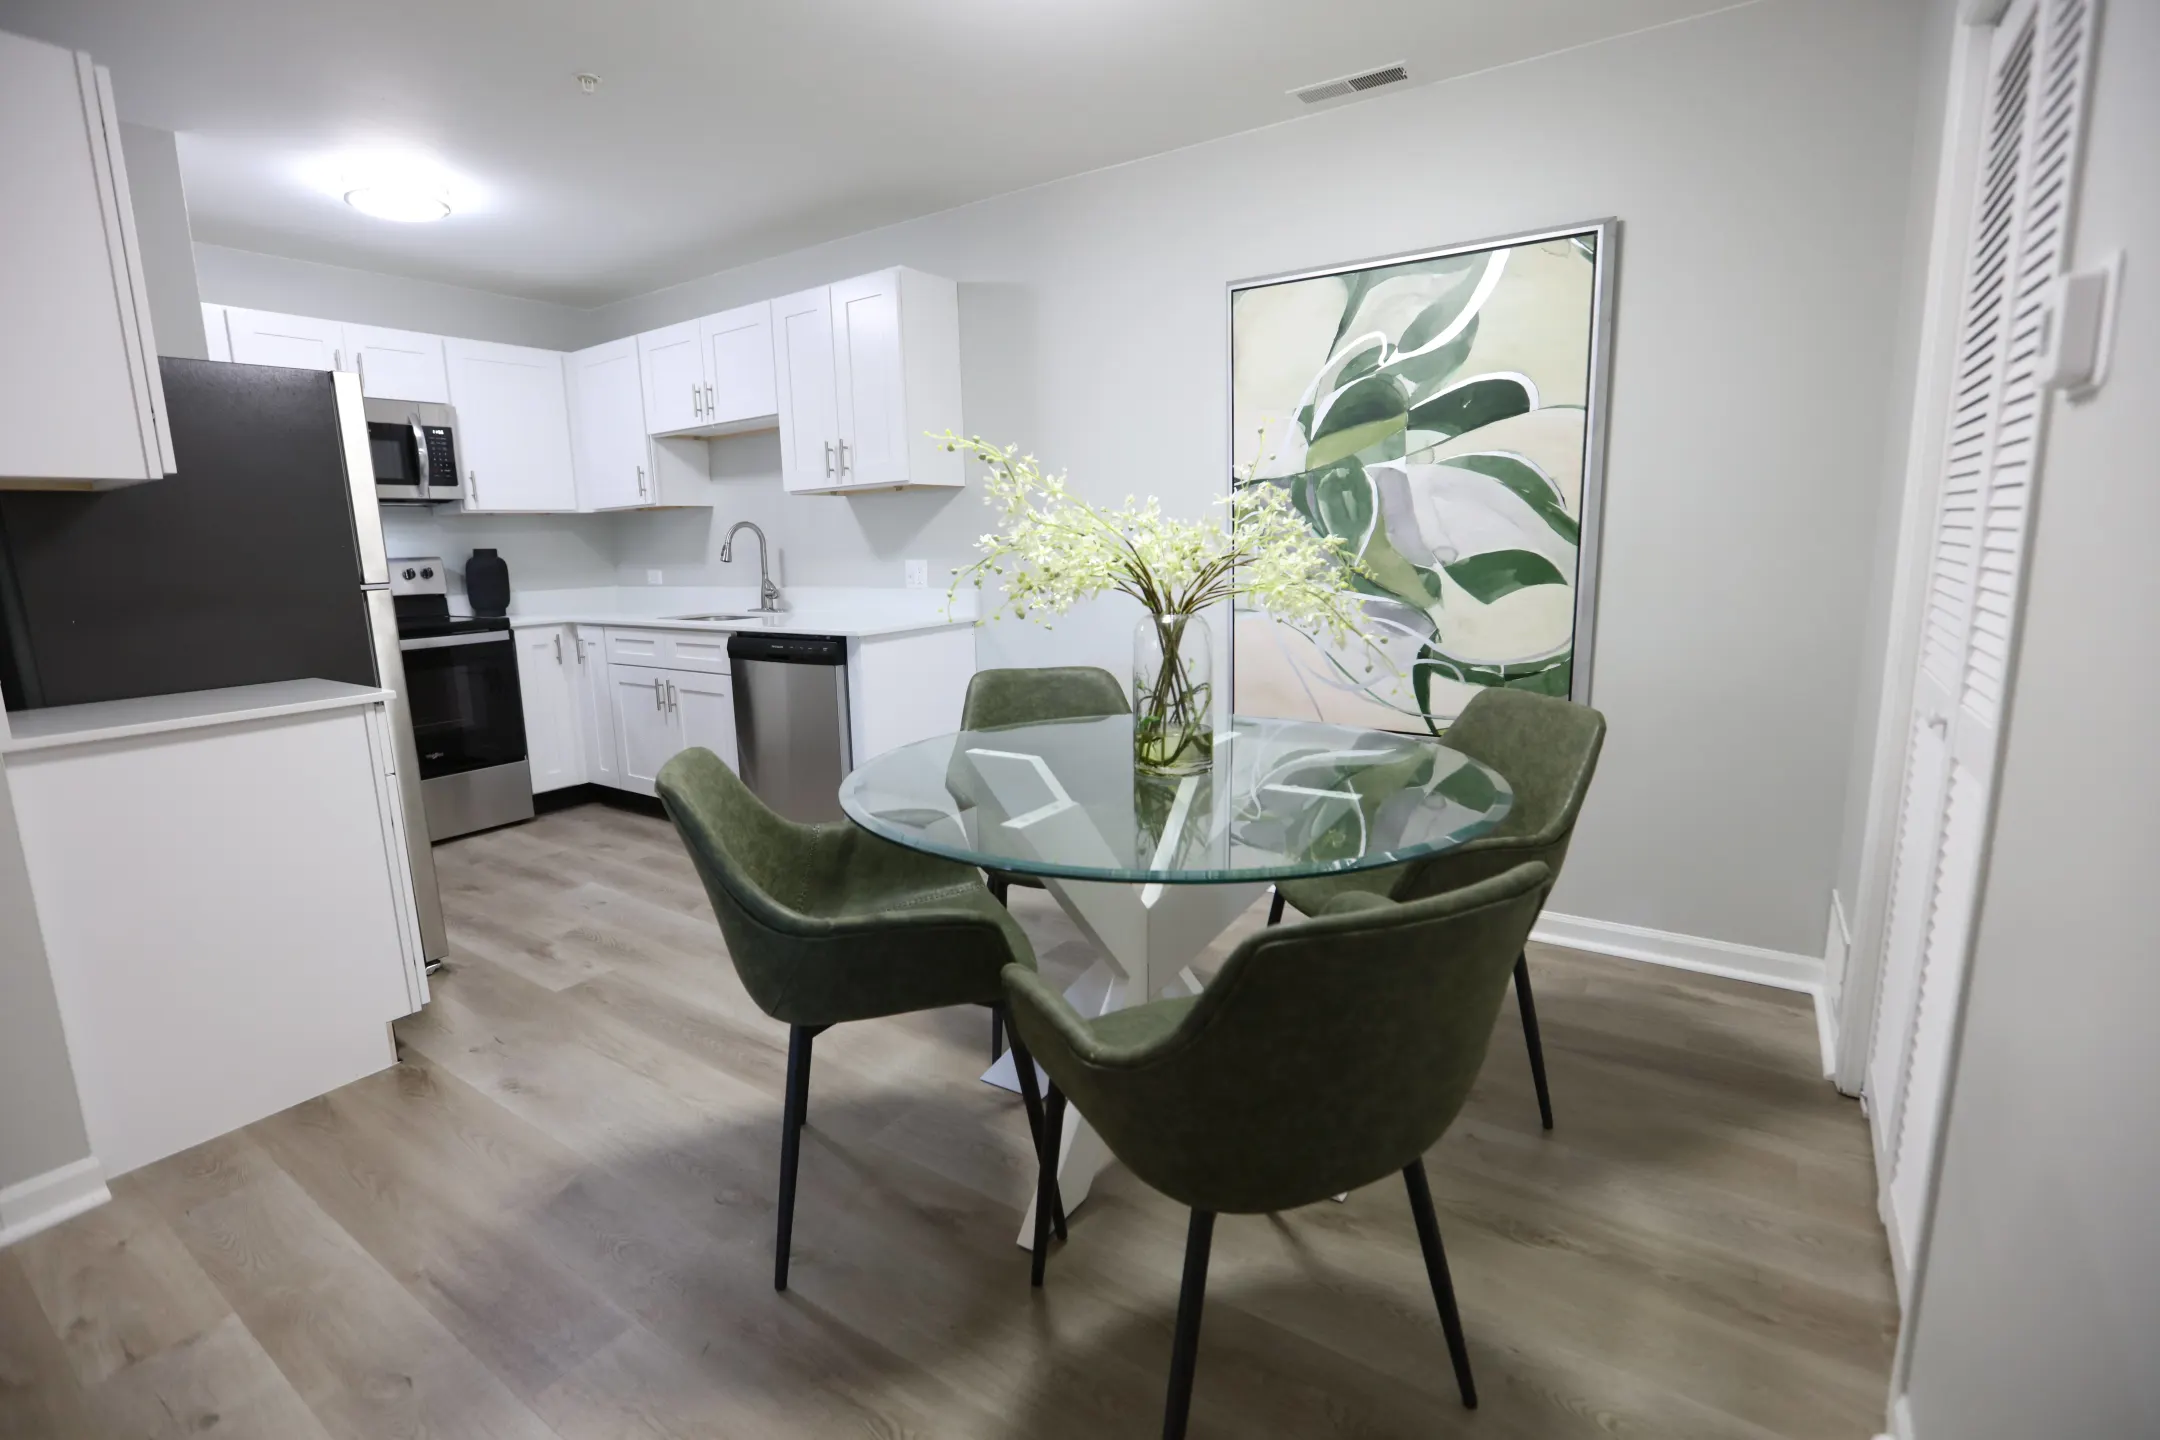 Dining Room - Evergreen Luxury Apartments - Merrillville, IN